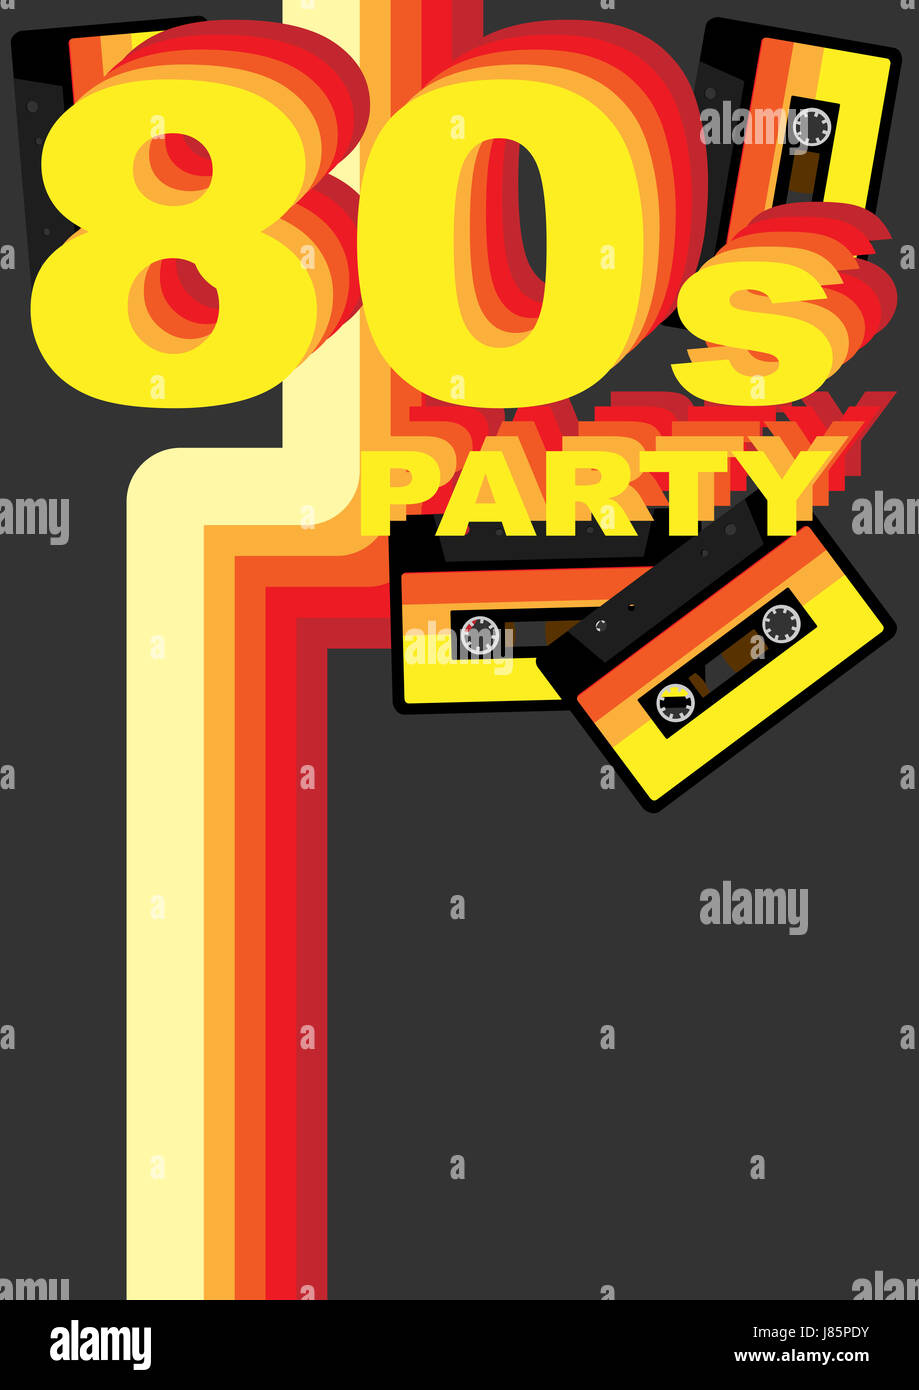 party celebration retro eighties backdrop background disco music sound graphic Stock Photo